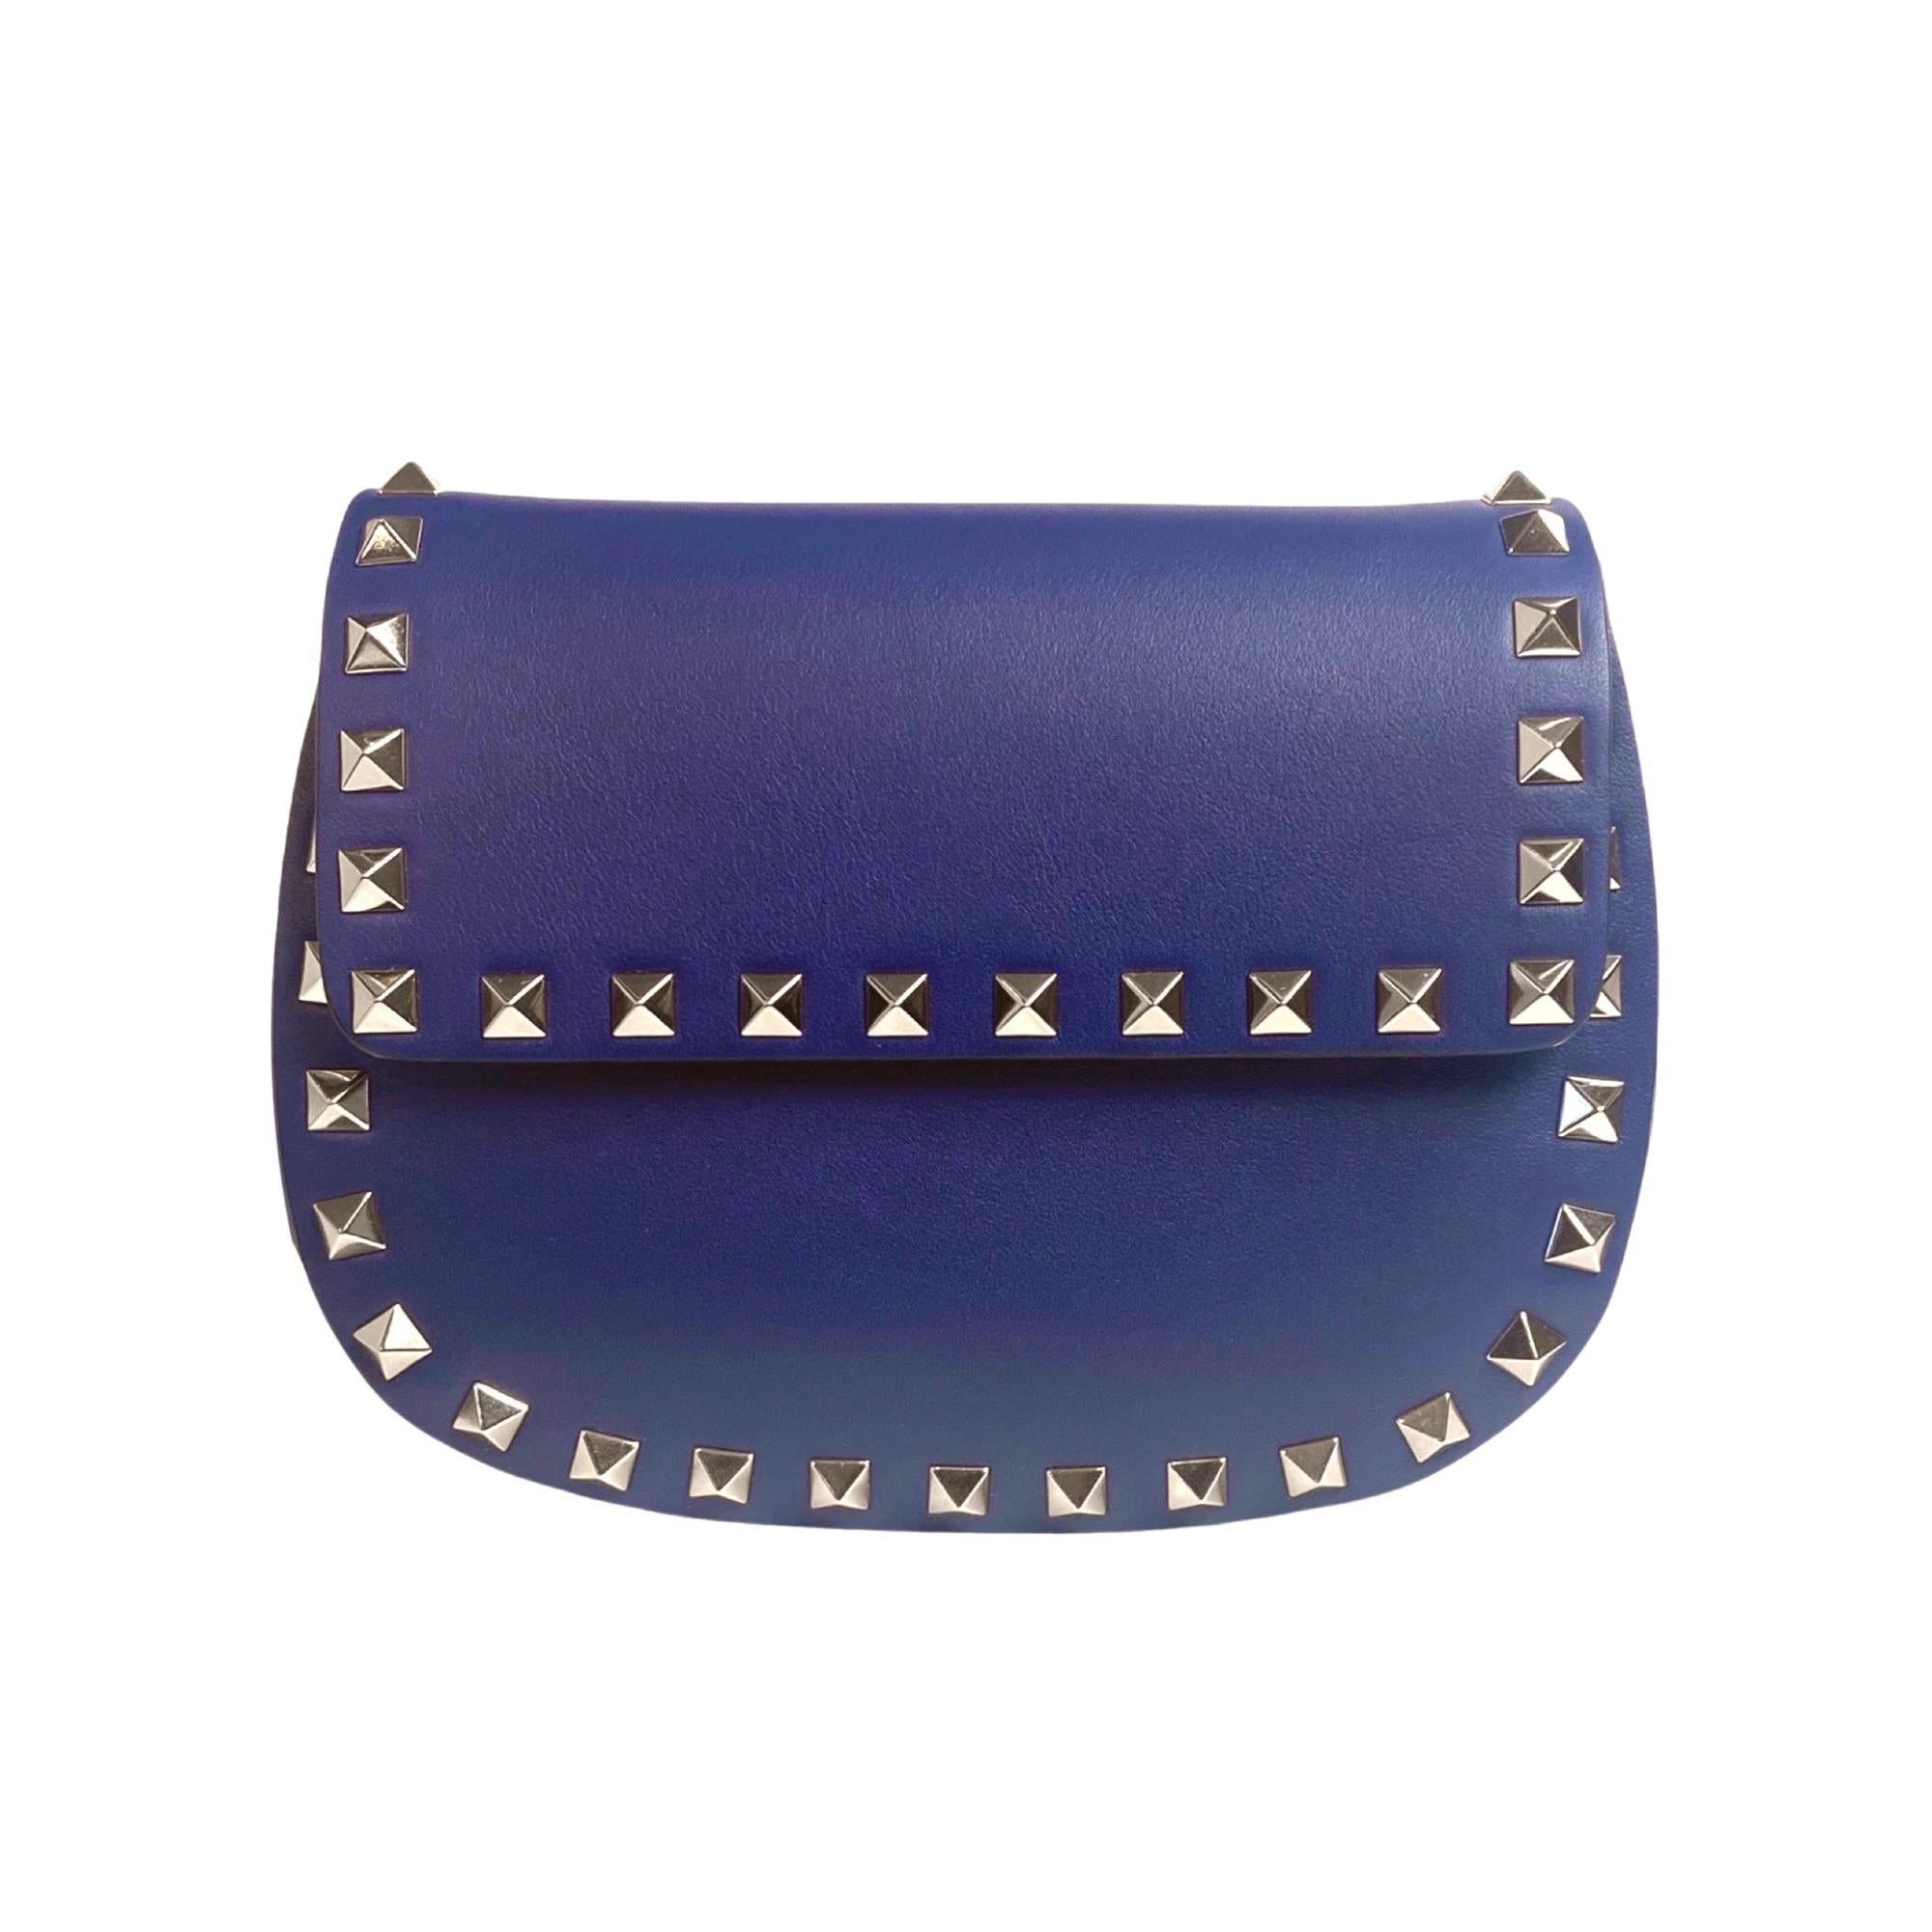 Valentino Garavani Rockstud Blue Calf Leather Small Chain Crossbody Clutch Bag